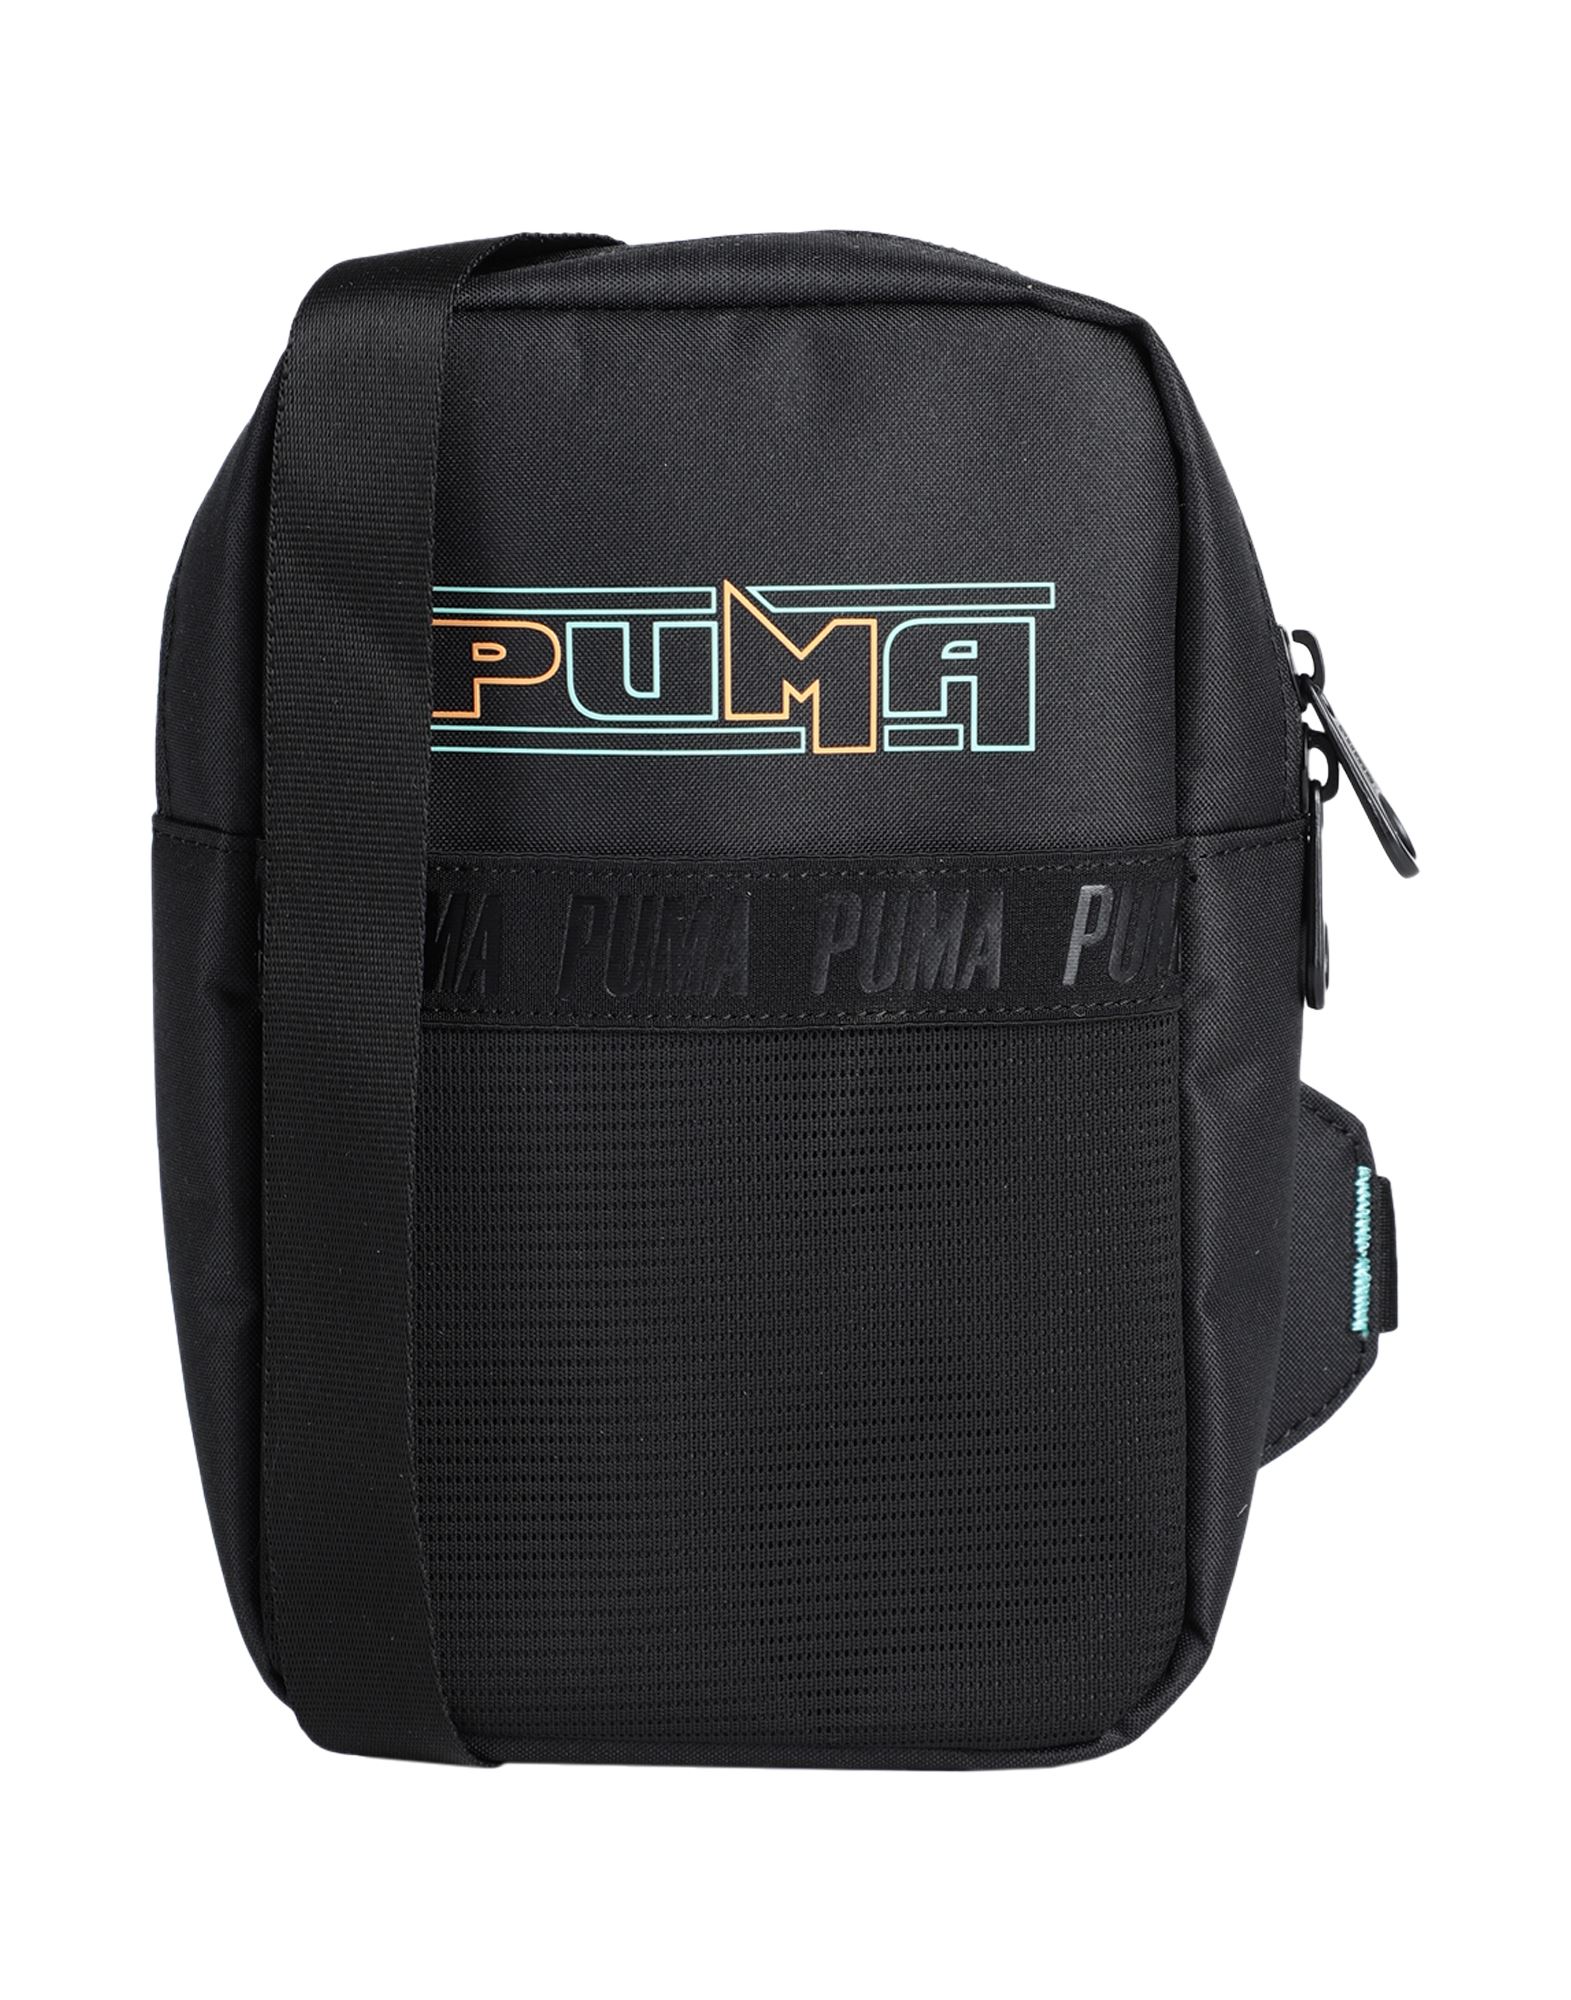 Puma Handbags In Black